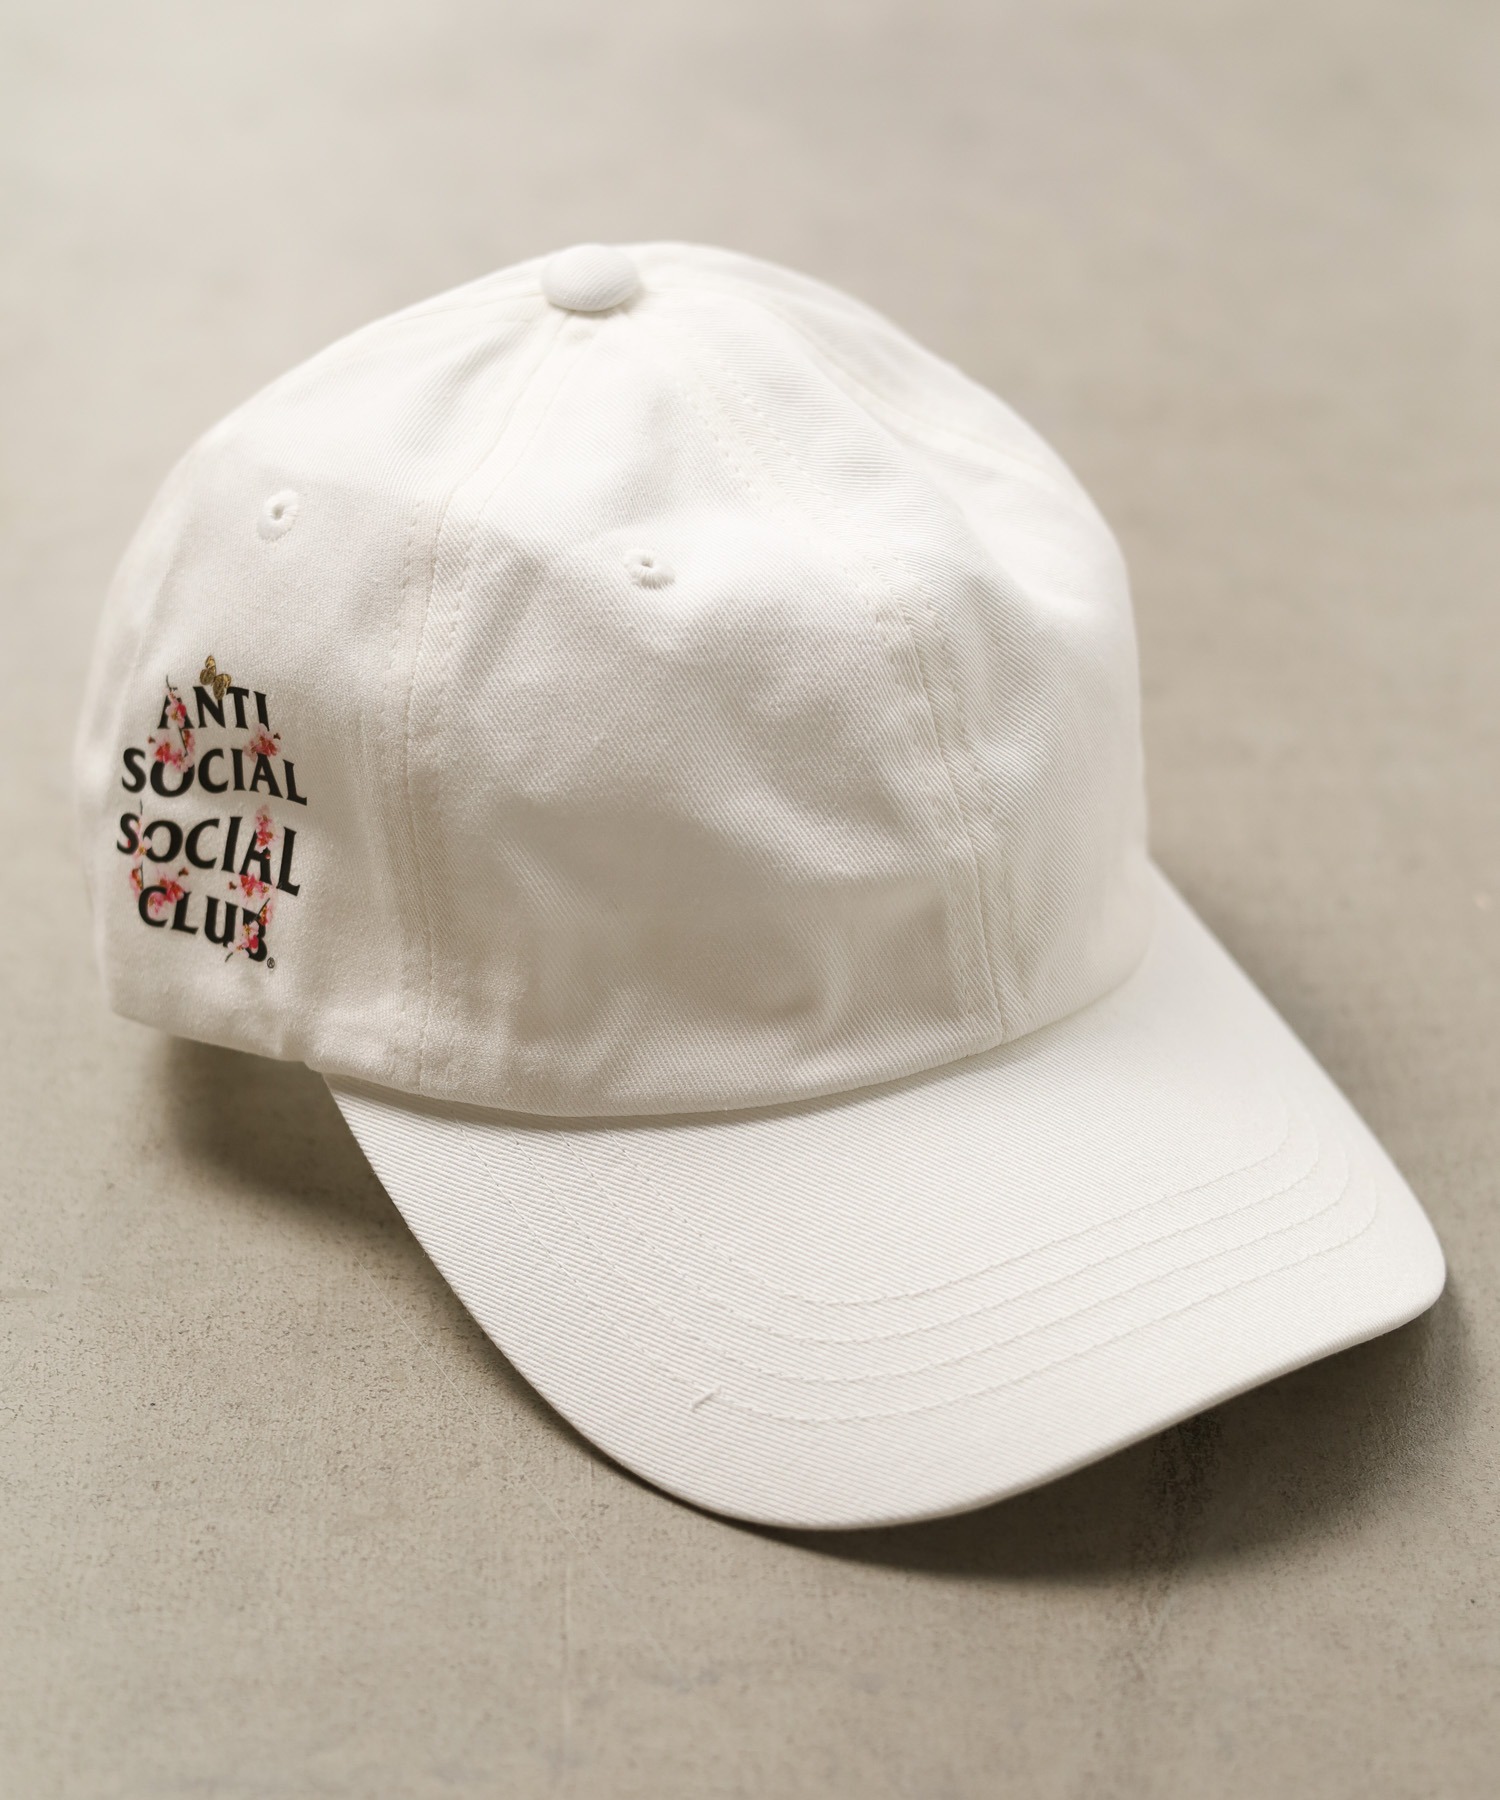 ANTI SOCIAL CLUB 8 Anti Club Social CAP 【国内即発送】 注目のブランド KKOCH